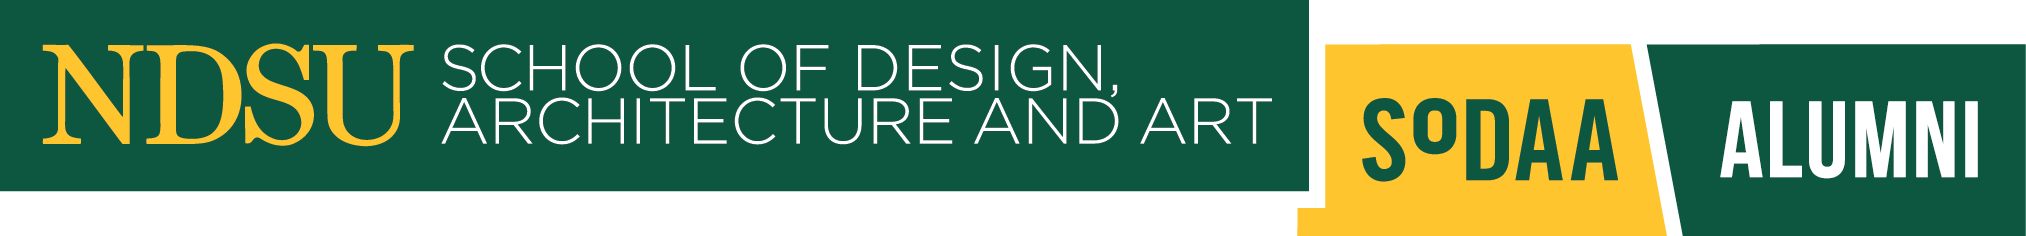 NDSU School of Design, Architecture, and Design